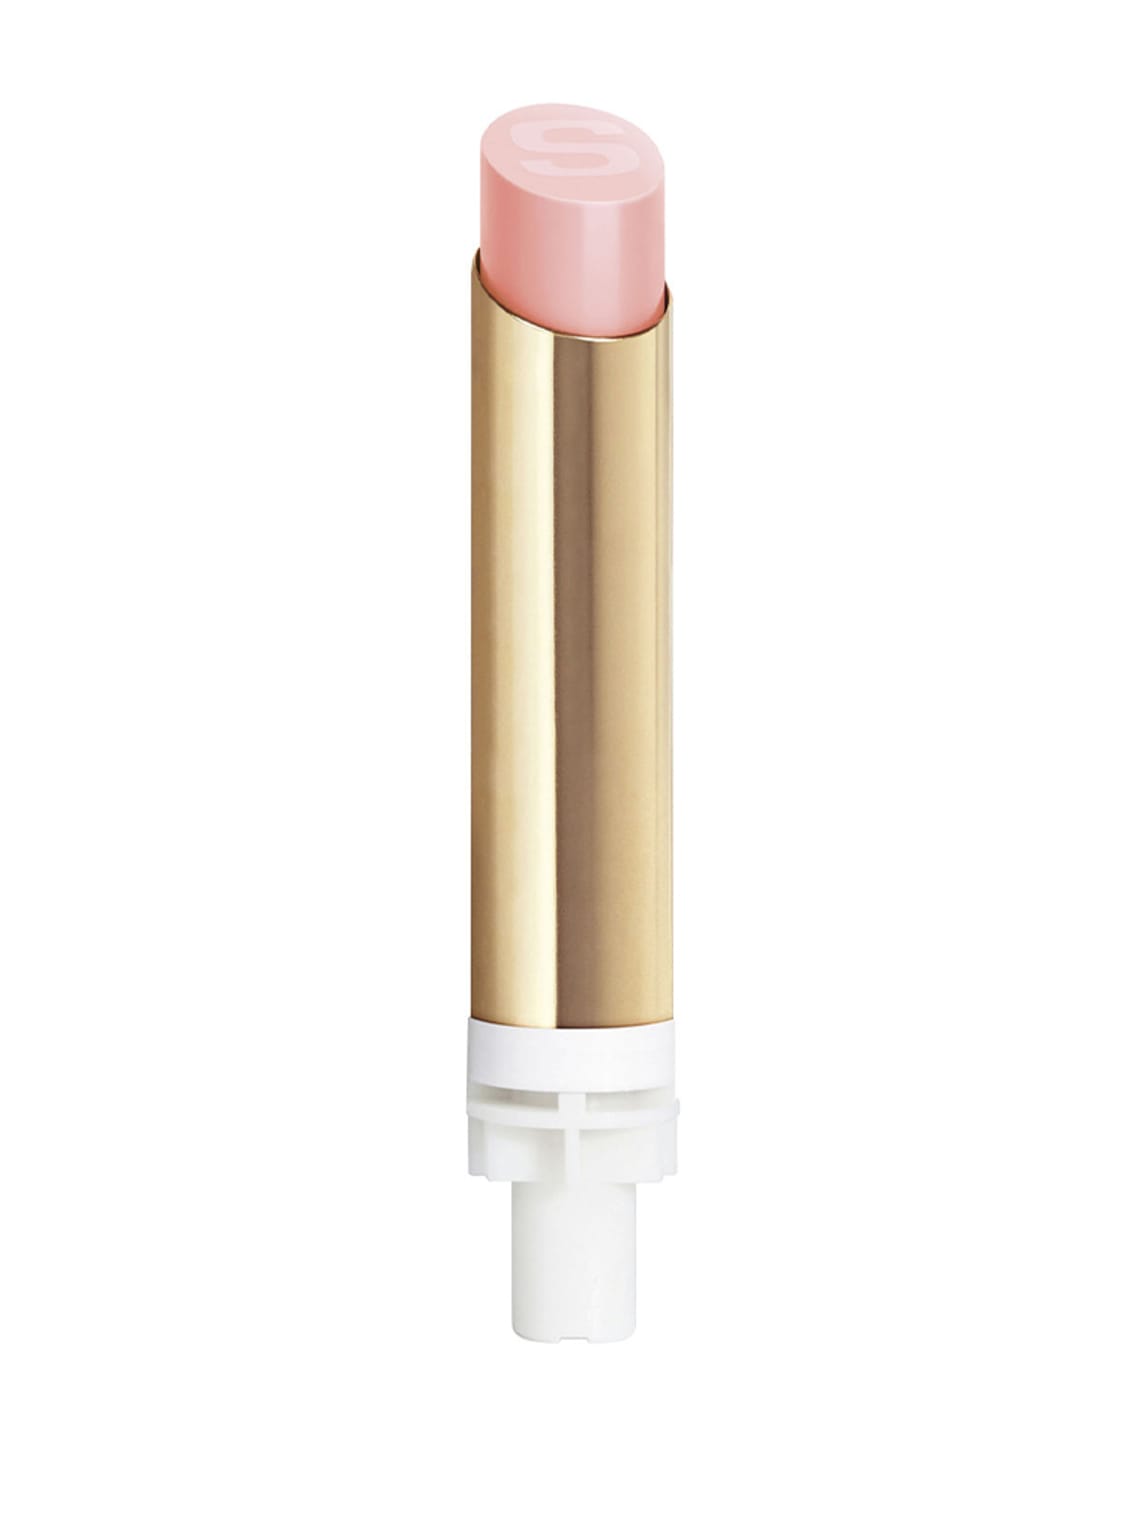 Sisley Paris Phyto-Lip Balm Refill Getönte Lippenpflege von sisley Paris